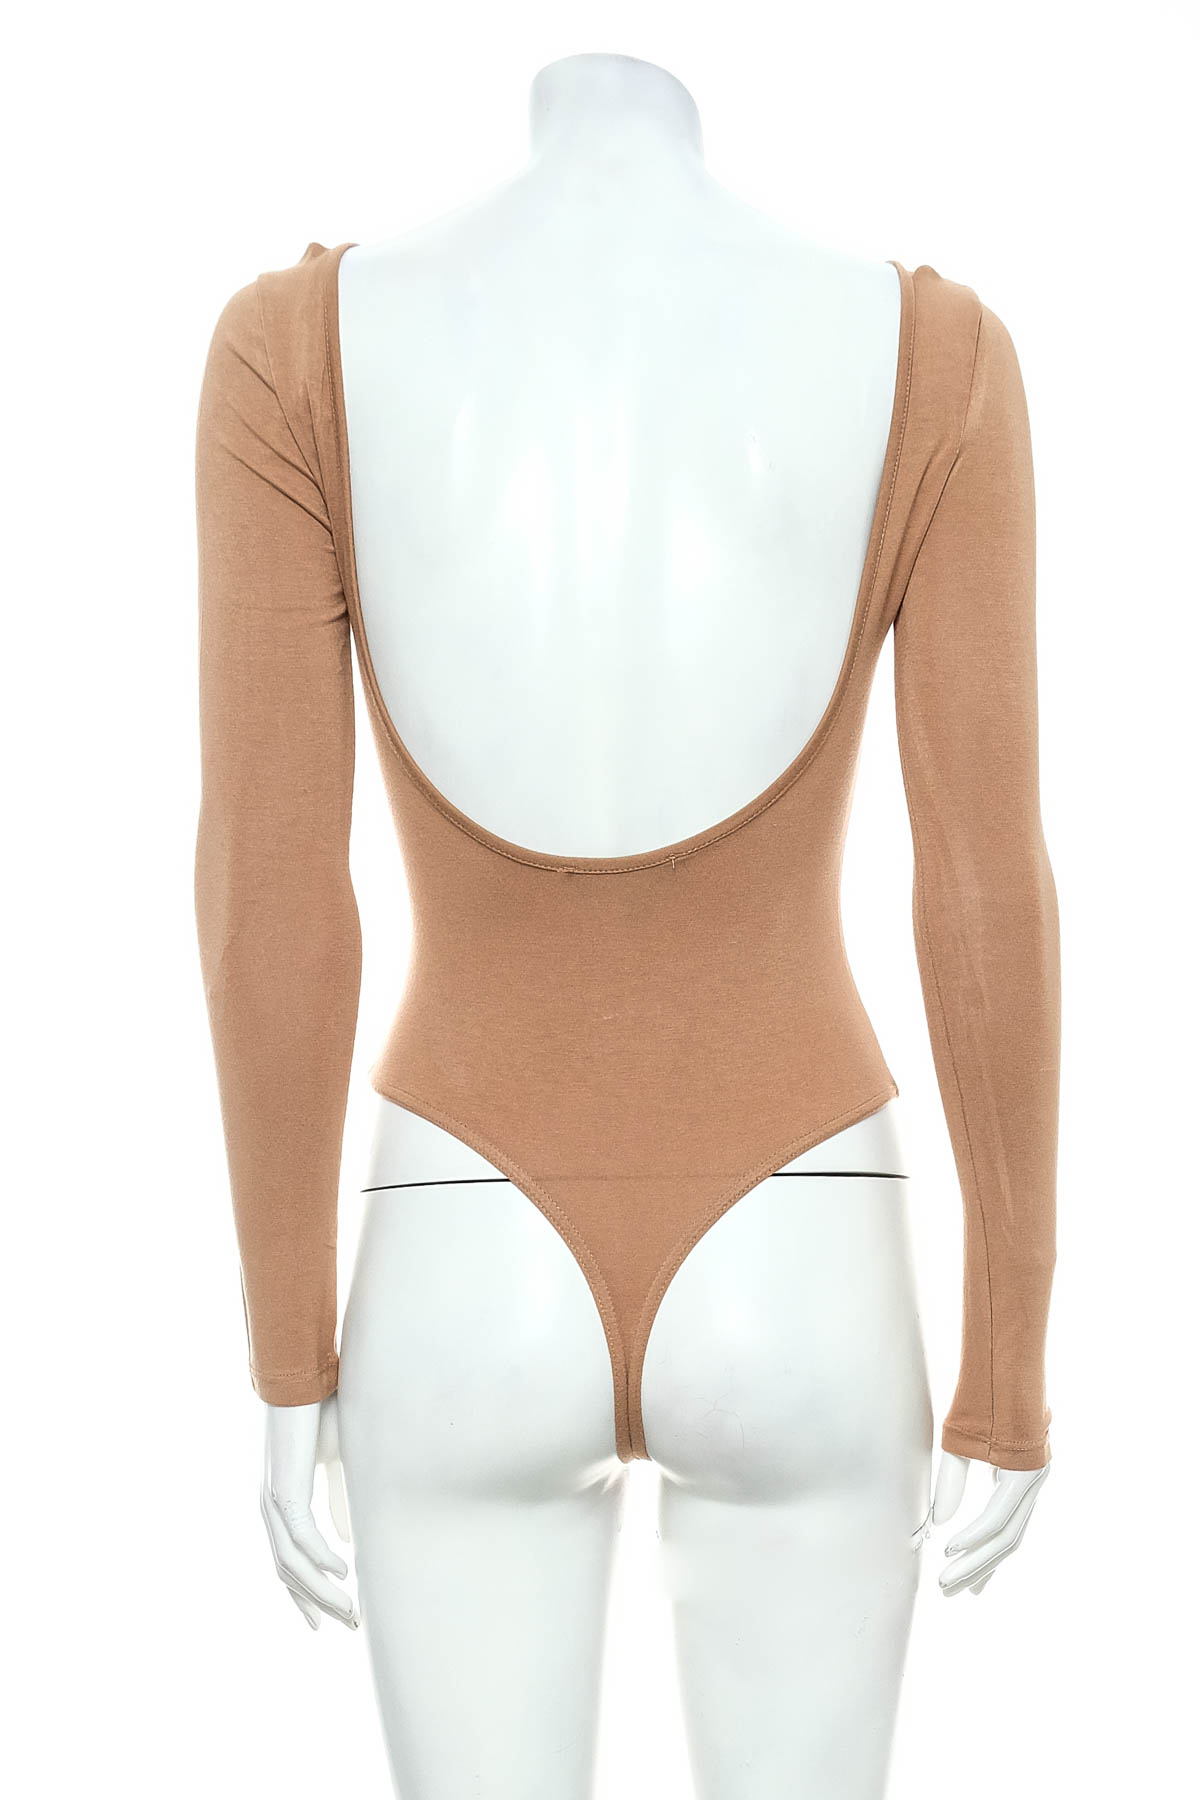 Woman's bodysuit - MISSGUIDED - 1